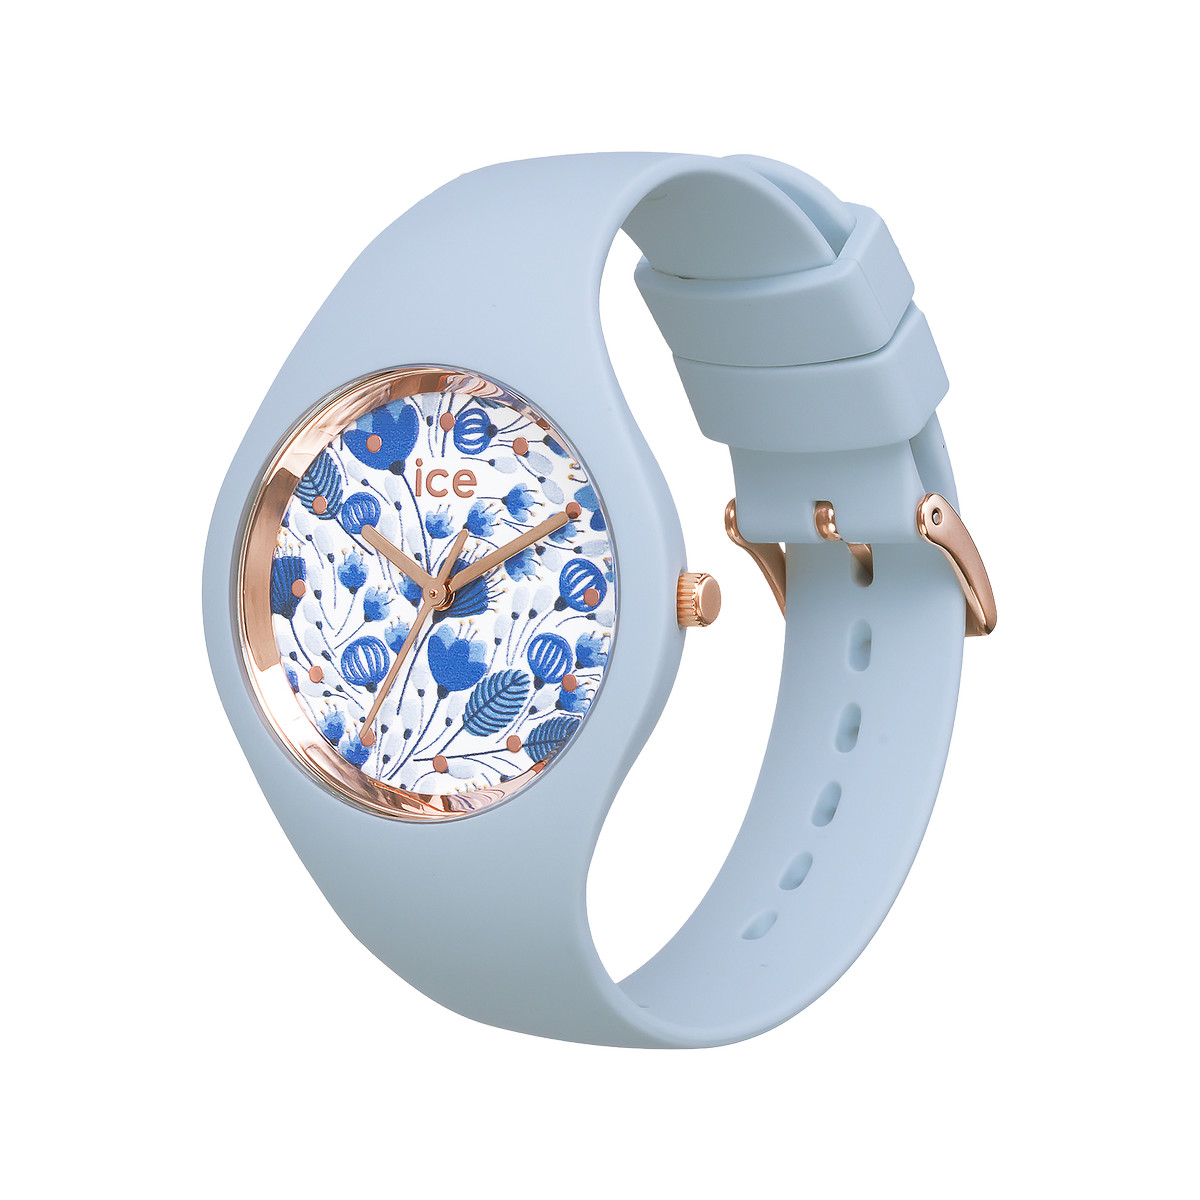 Montre Ice Watch small femme plastique silicone bleu - vue 5